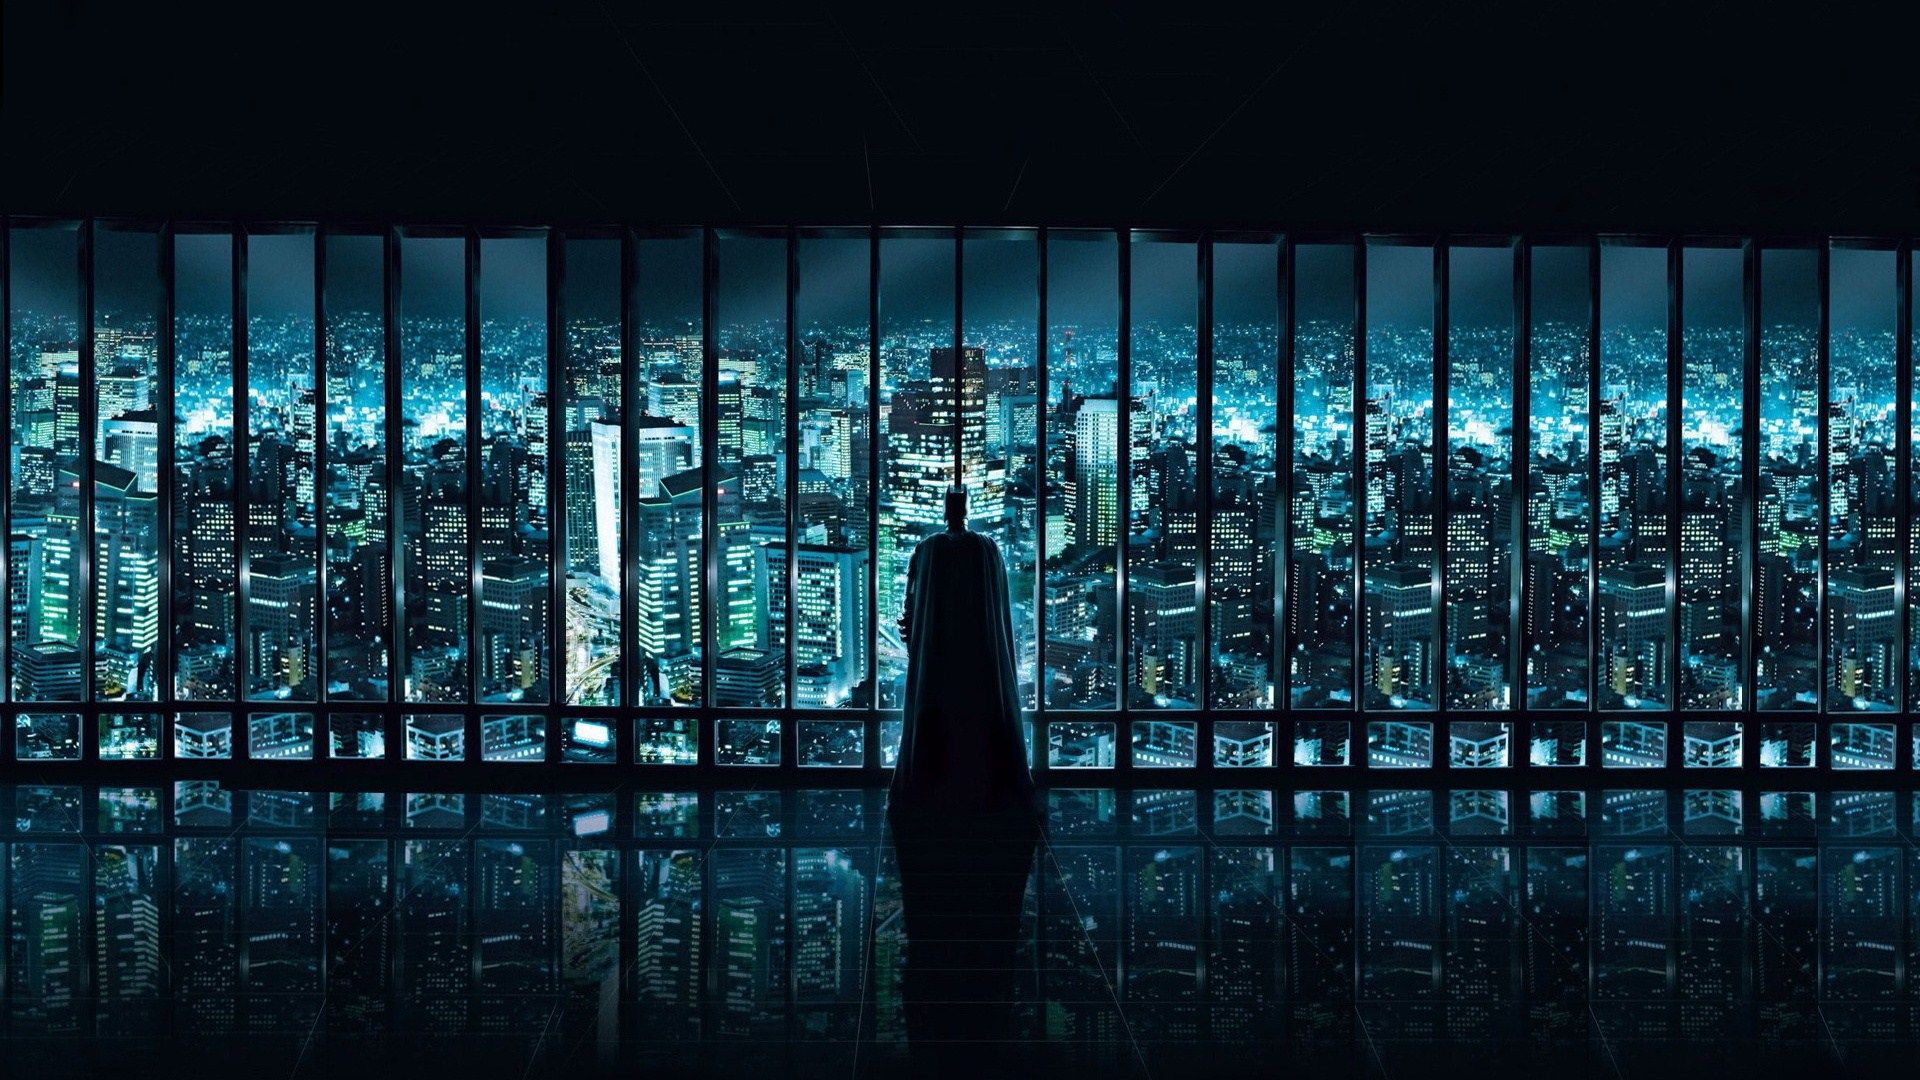 Batman HD Wallpaper. Batman Image Free